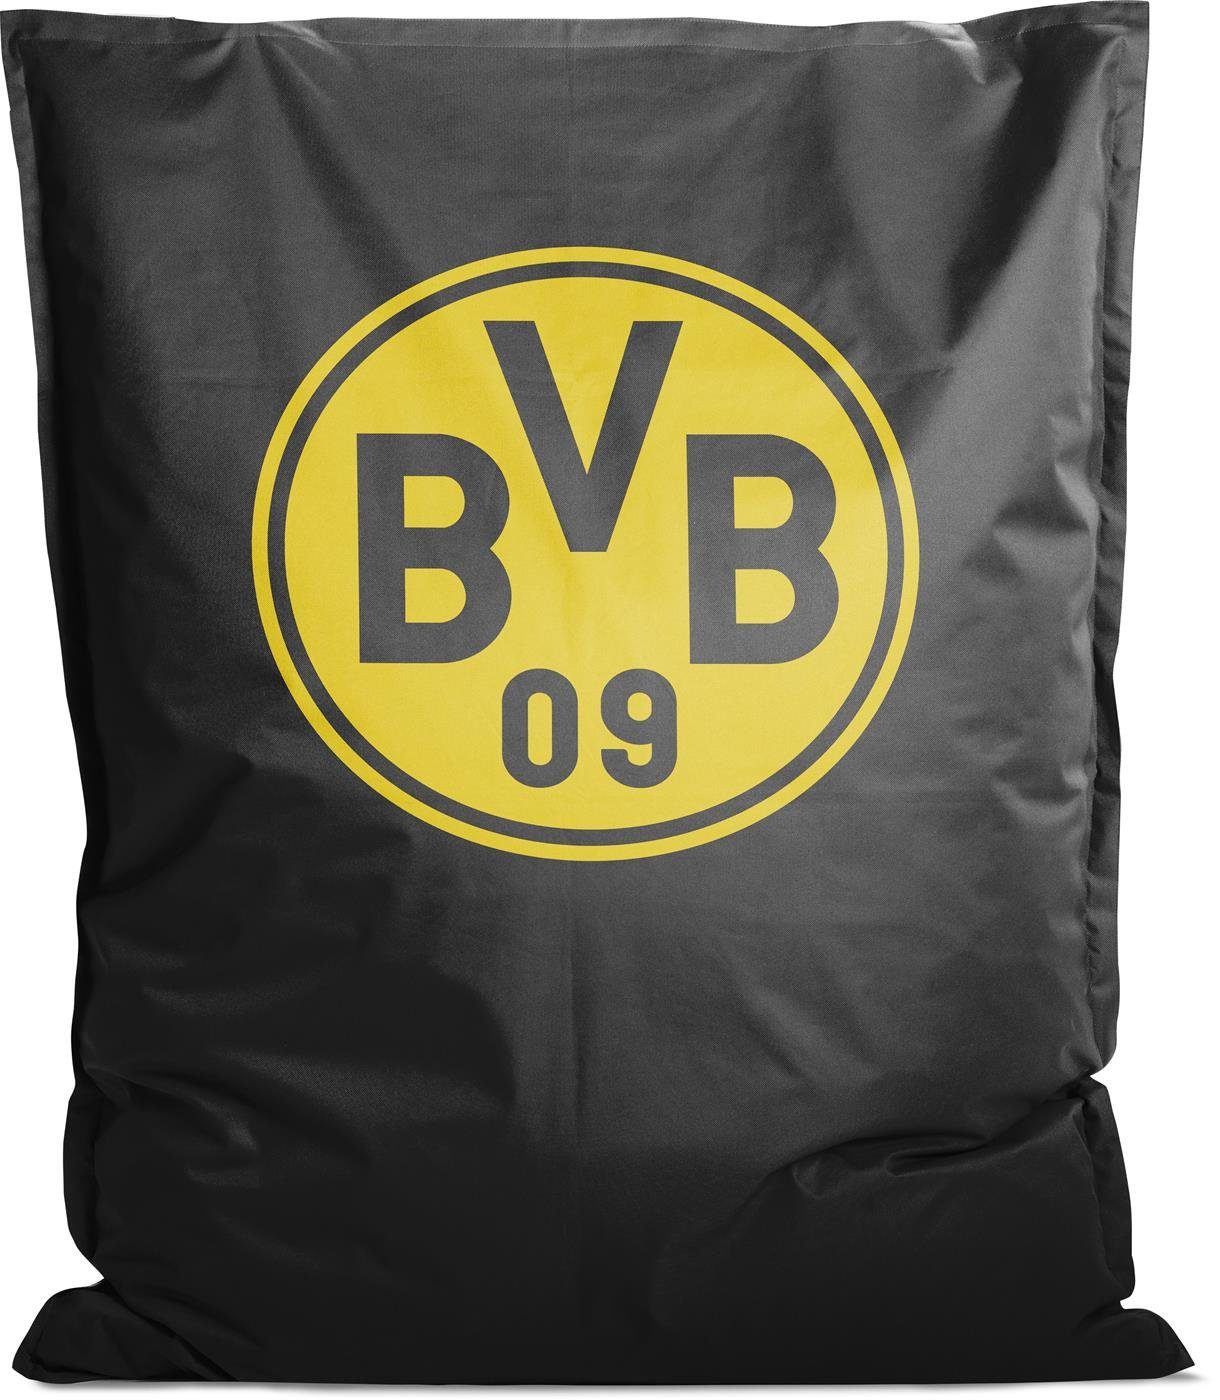 Bezug BigBag Borussia Sitzsack (1 Magma St., Dortmund), Sitzsack waschbar BVB VIP Heimtex